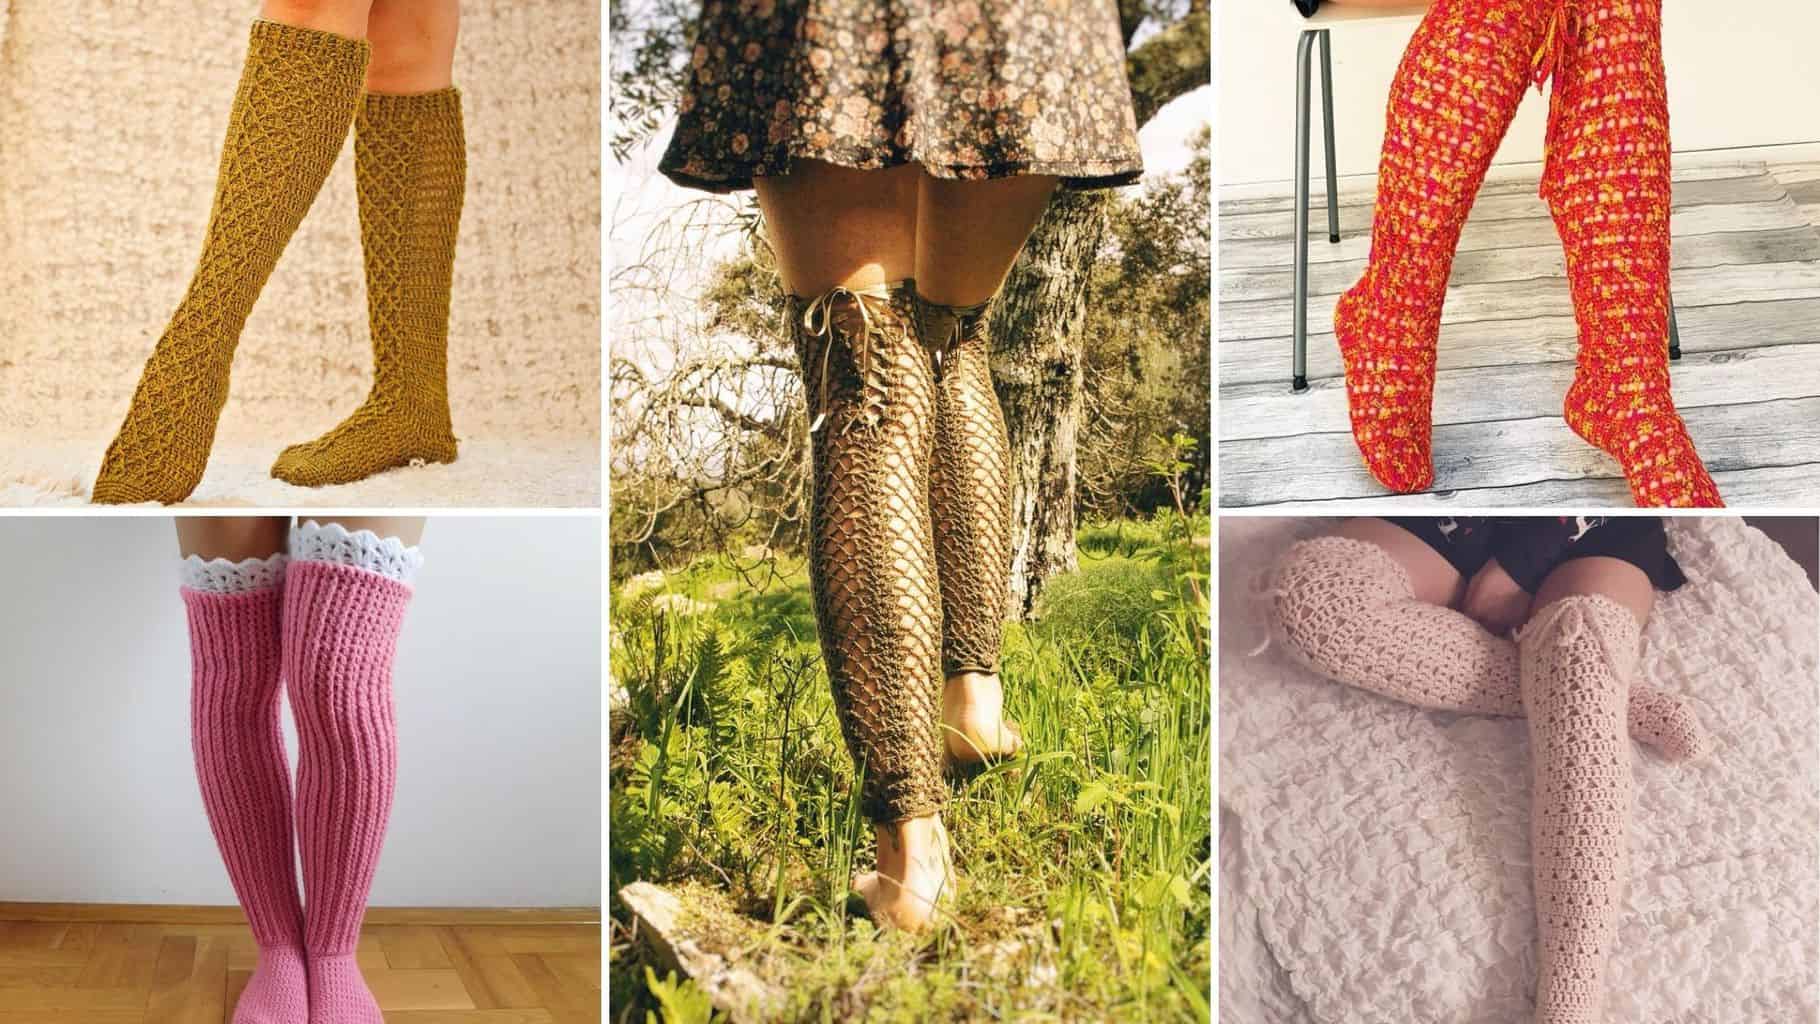 Thigh High Sock Crochet Patterns - Easy Crochet Patterns